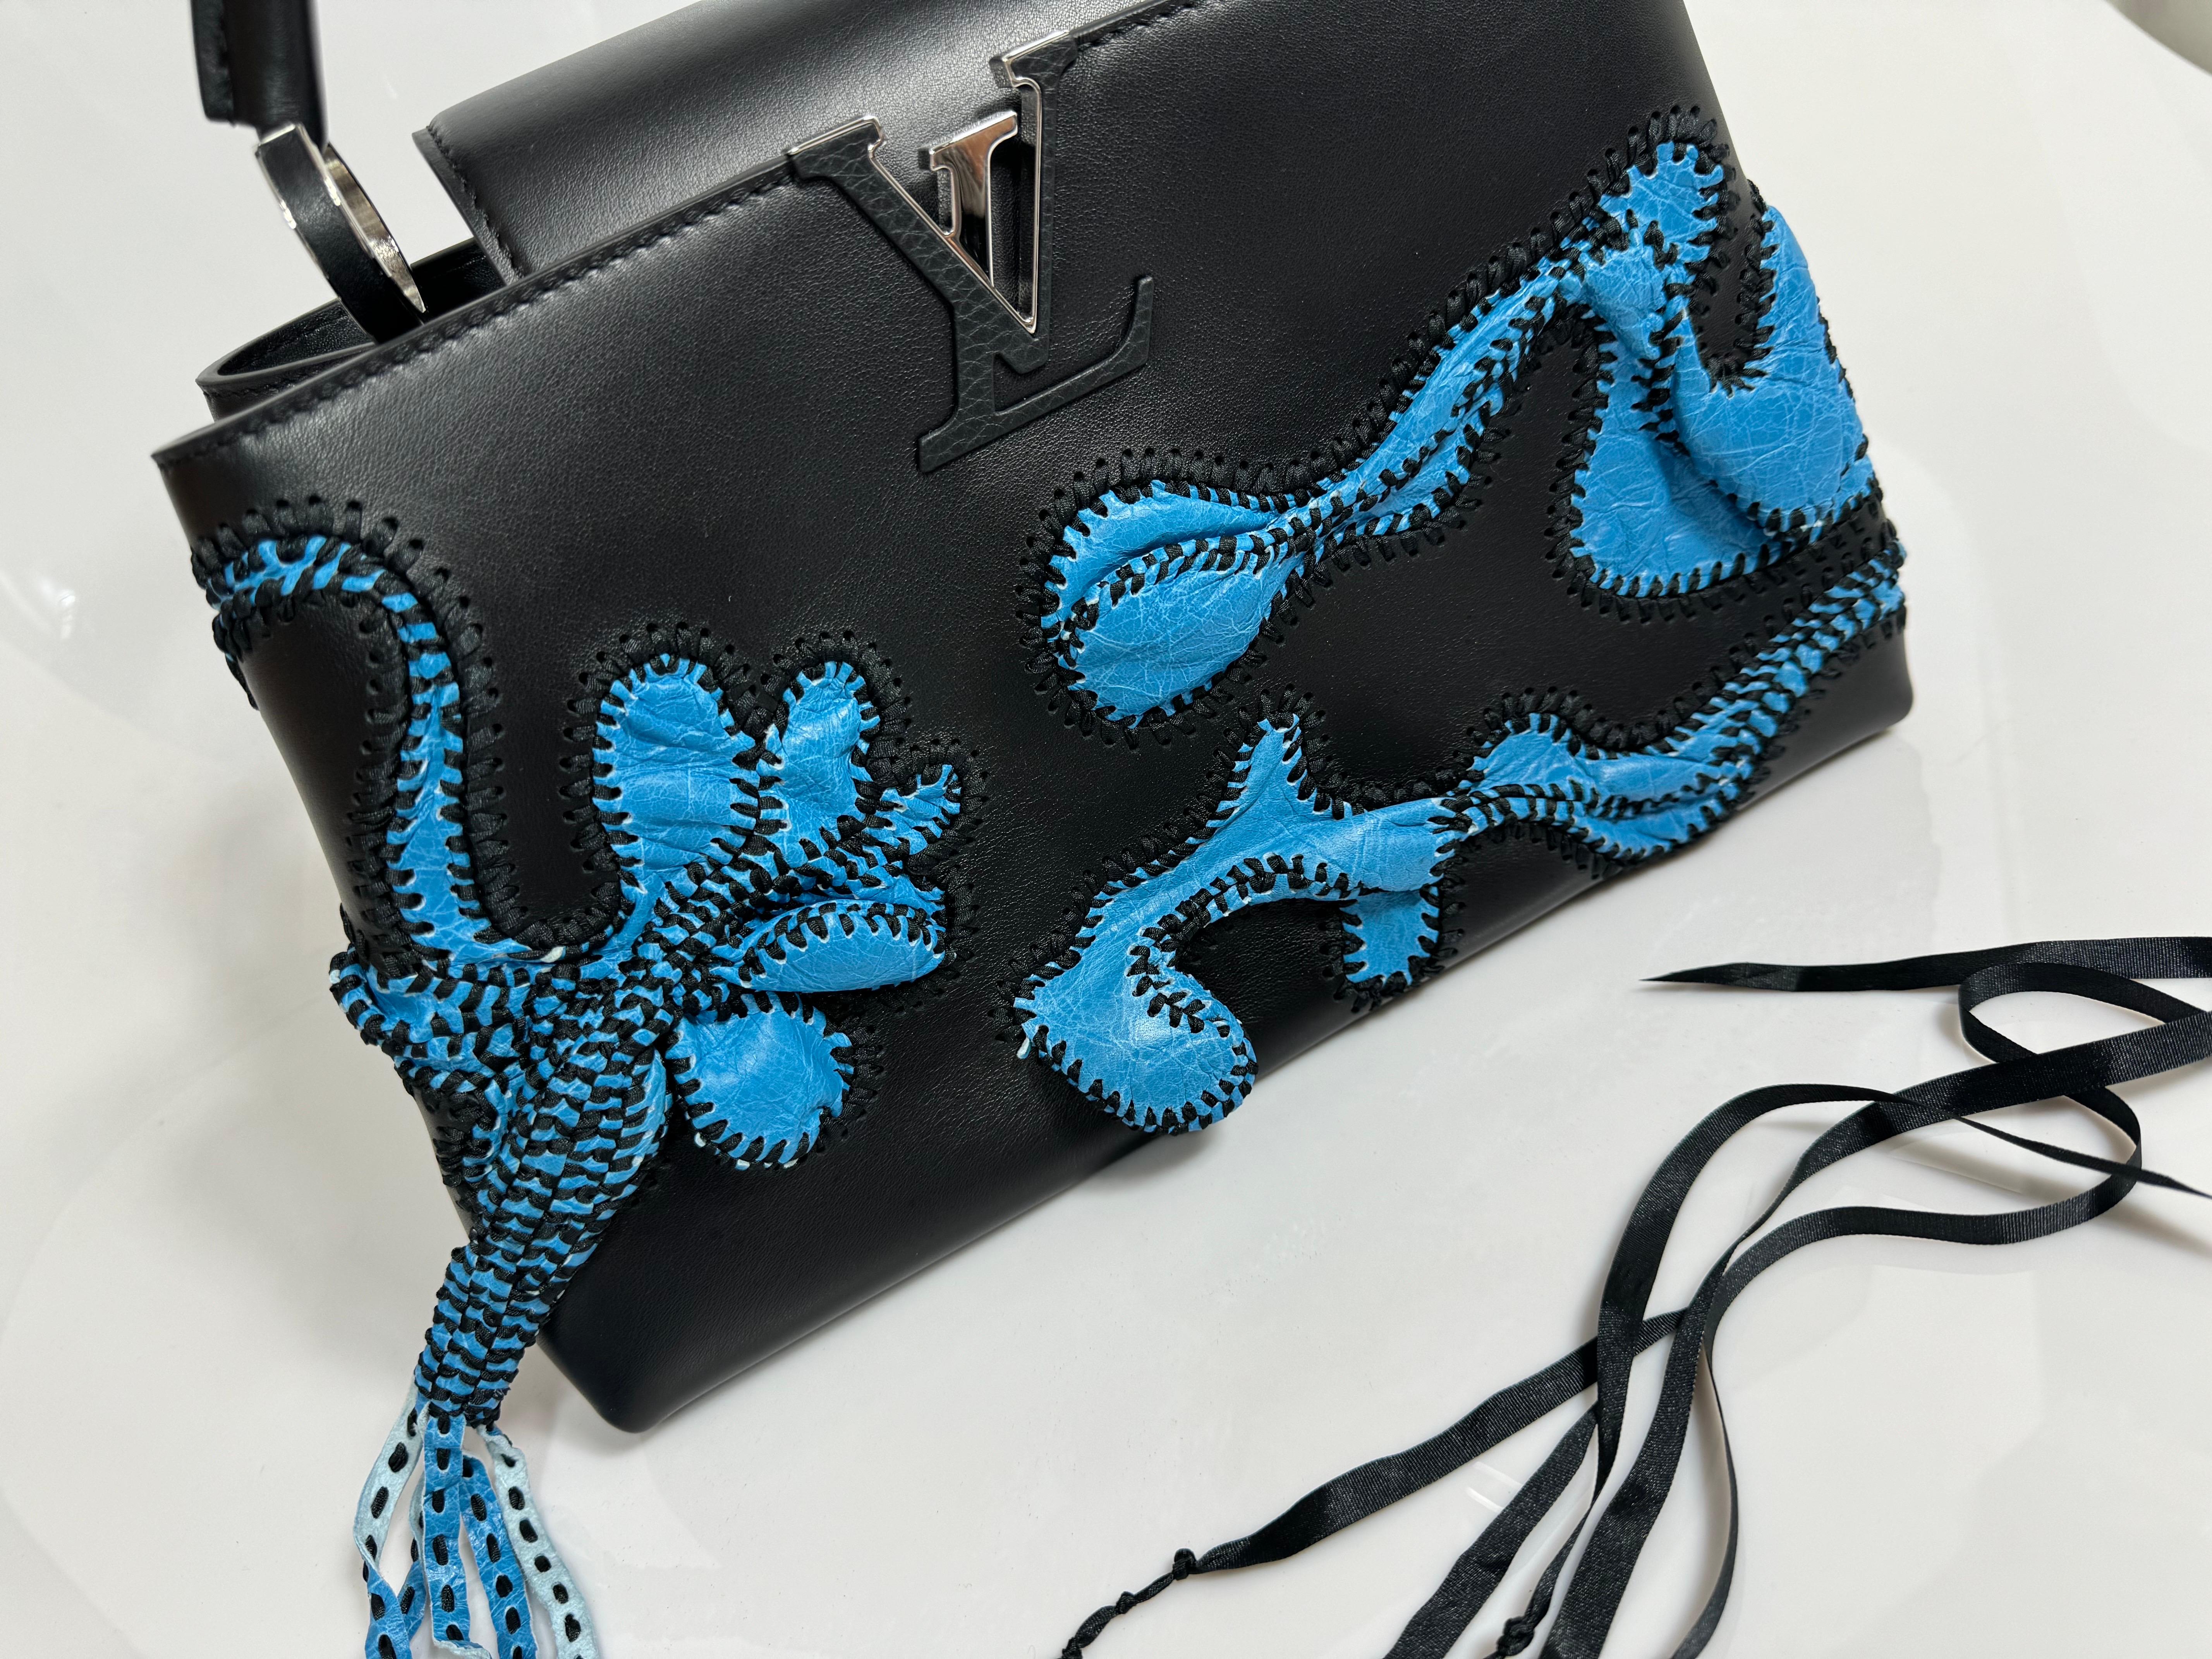 Louis Vuitton Limited Edition Nicholas Hlobo's Artycapucines Handtasche-NEW IN BOX im Angebot 2